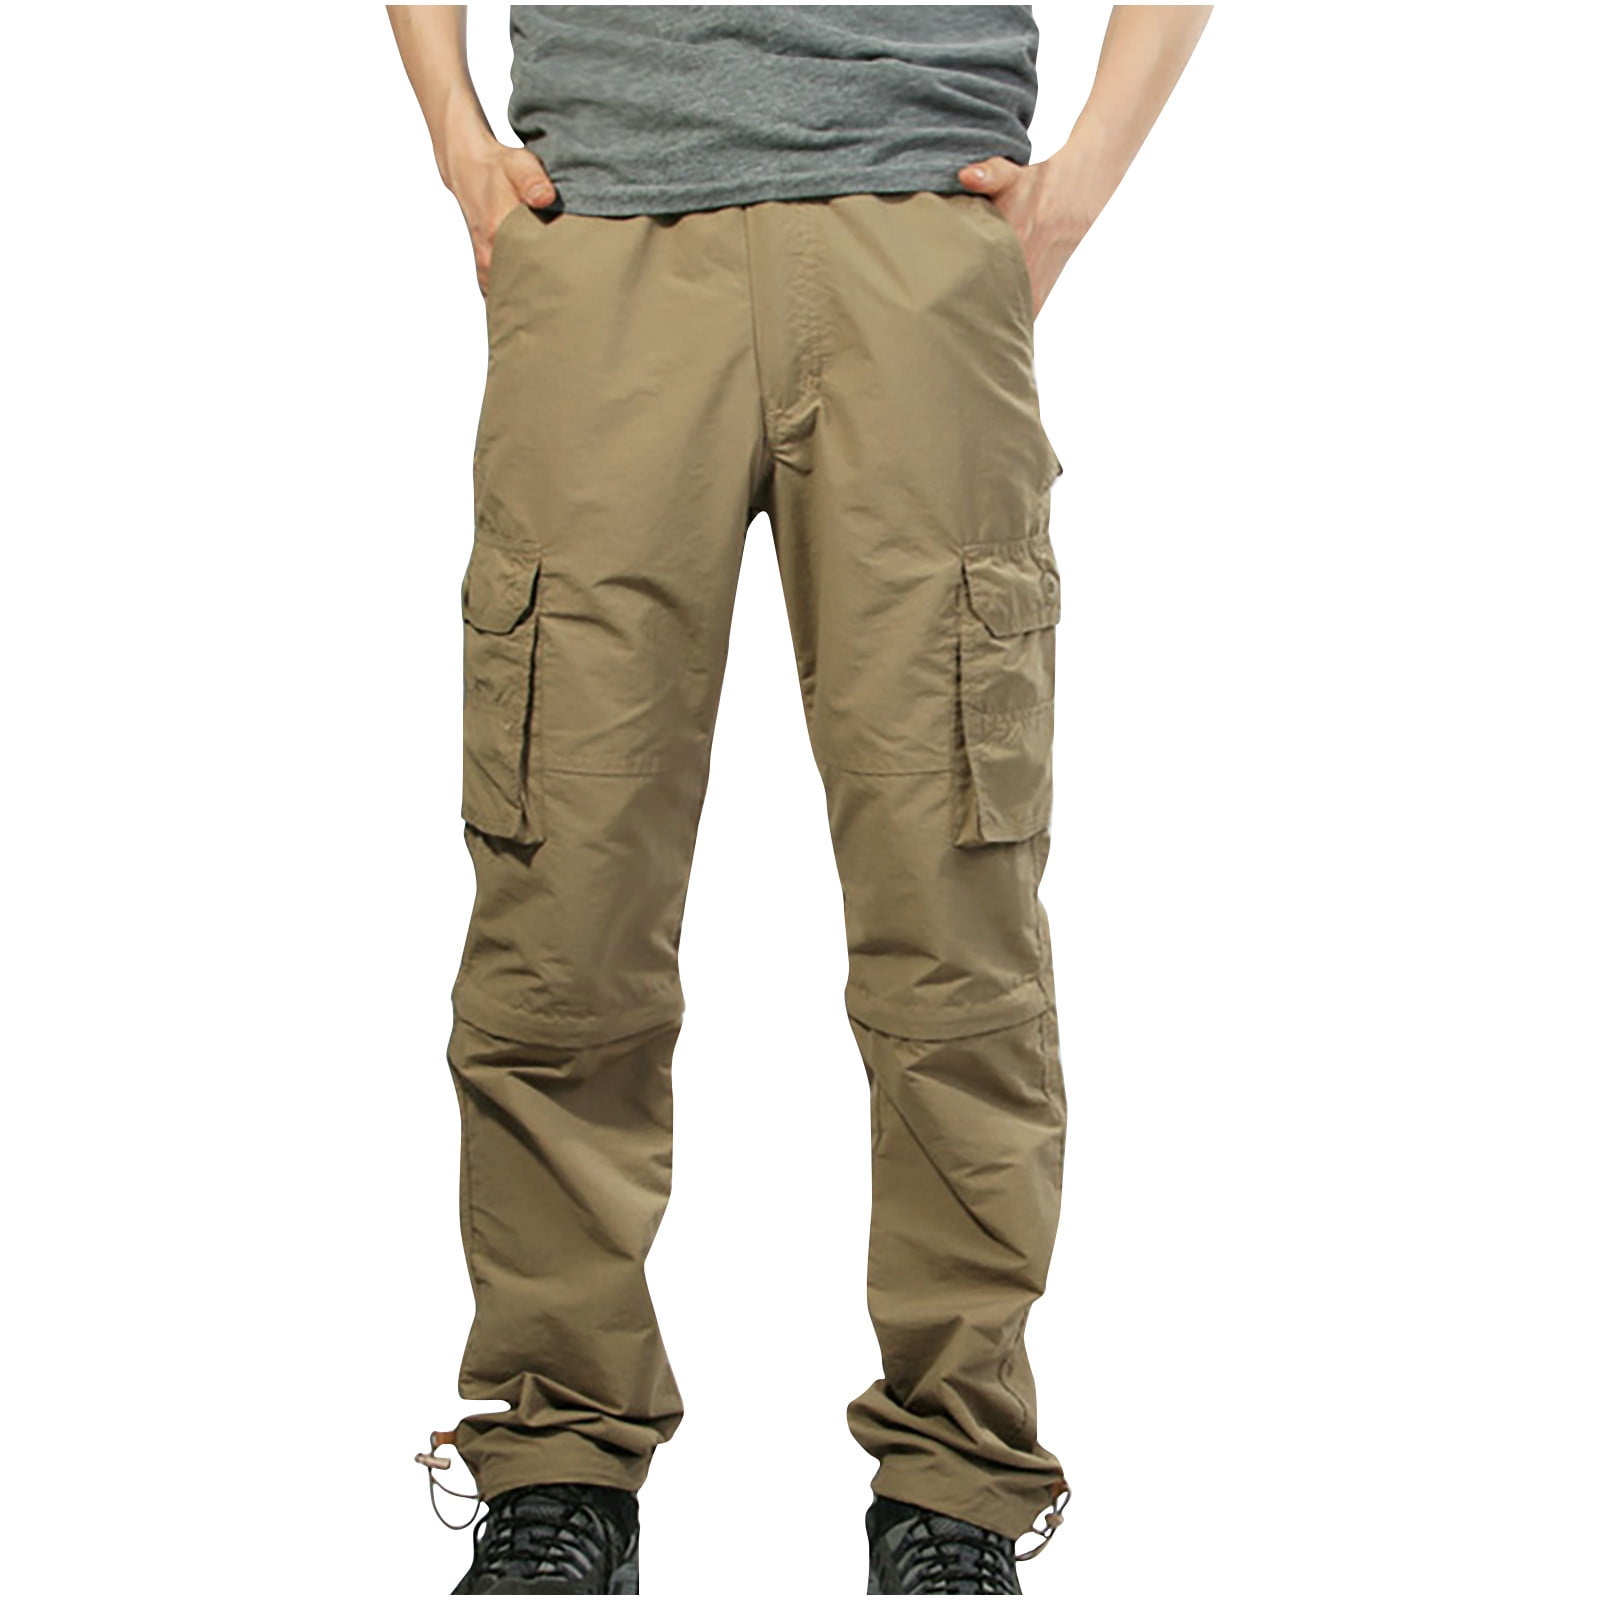 Men's Detachable Hiking Pants Lightweight Hiking Travel Convertible Cargo  Pants Outdoor Fishing Safari Pants/Shorts 